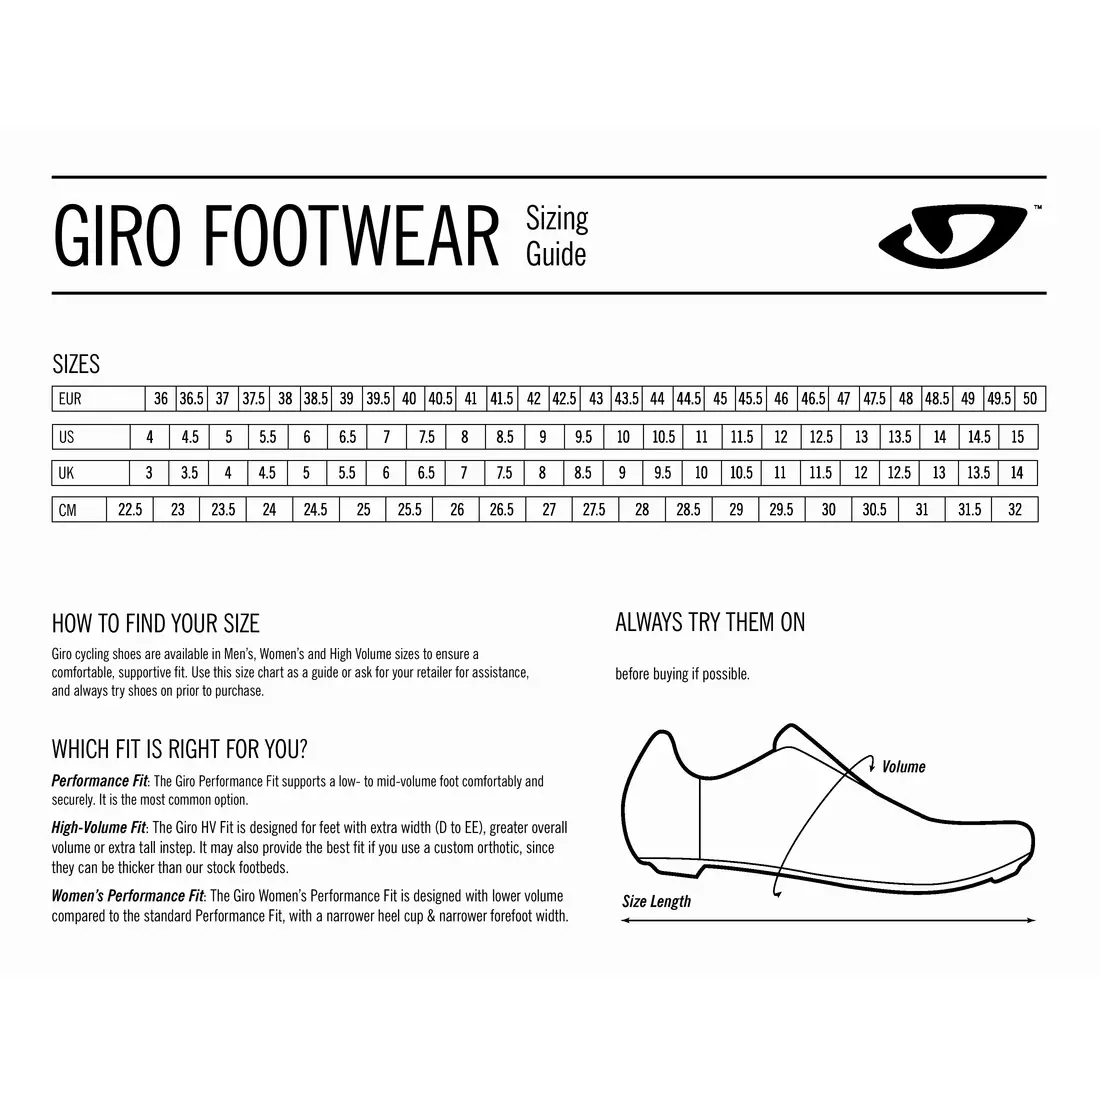 GIRO men's bicycle shoes STYLUS white GR-7123015